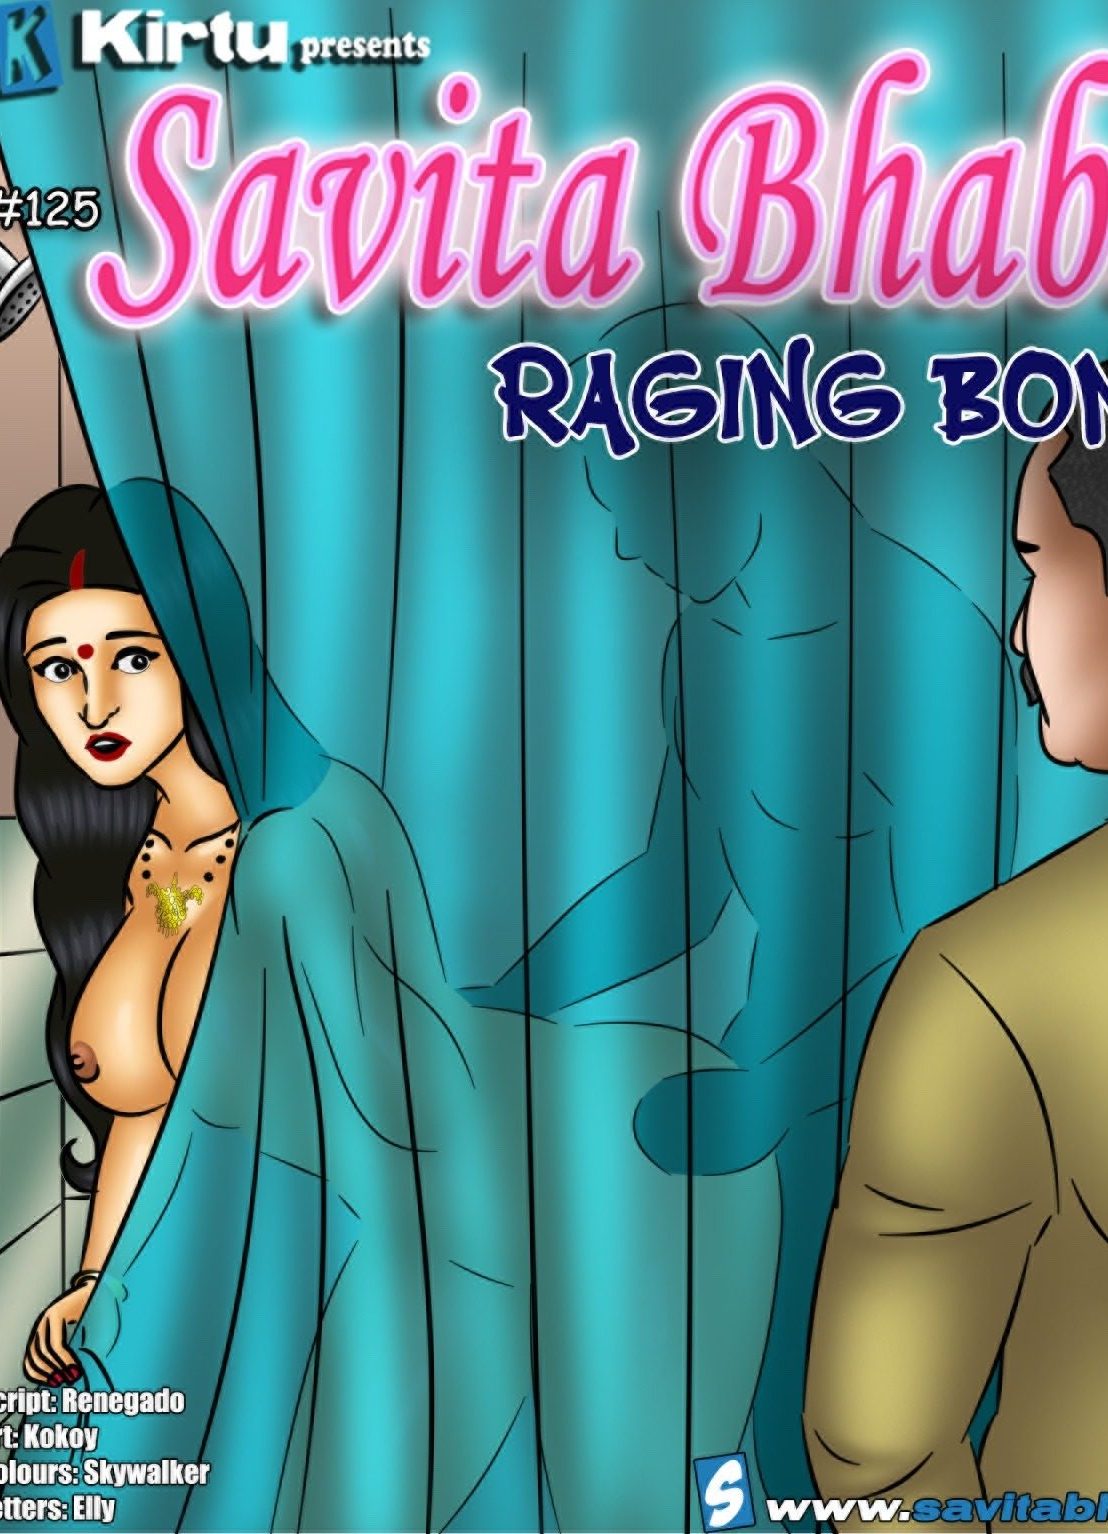 Savita bhabi comics online free